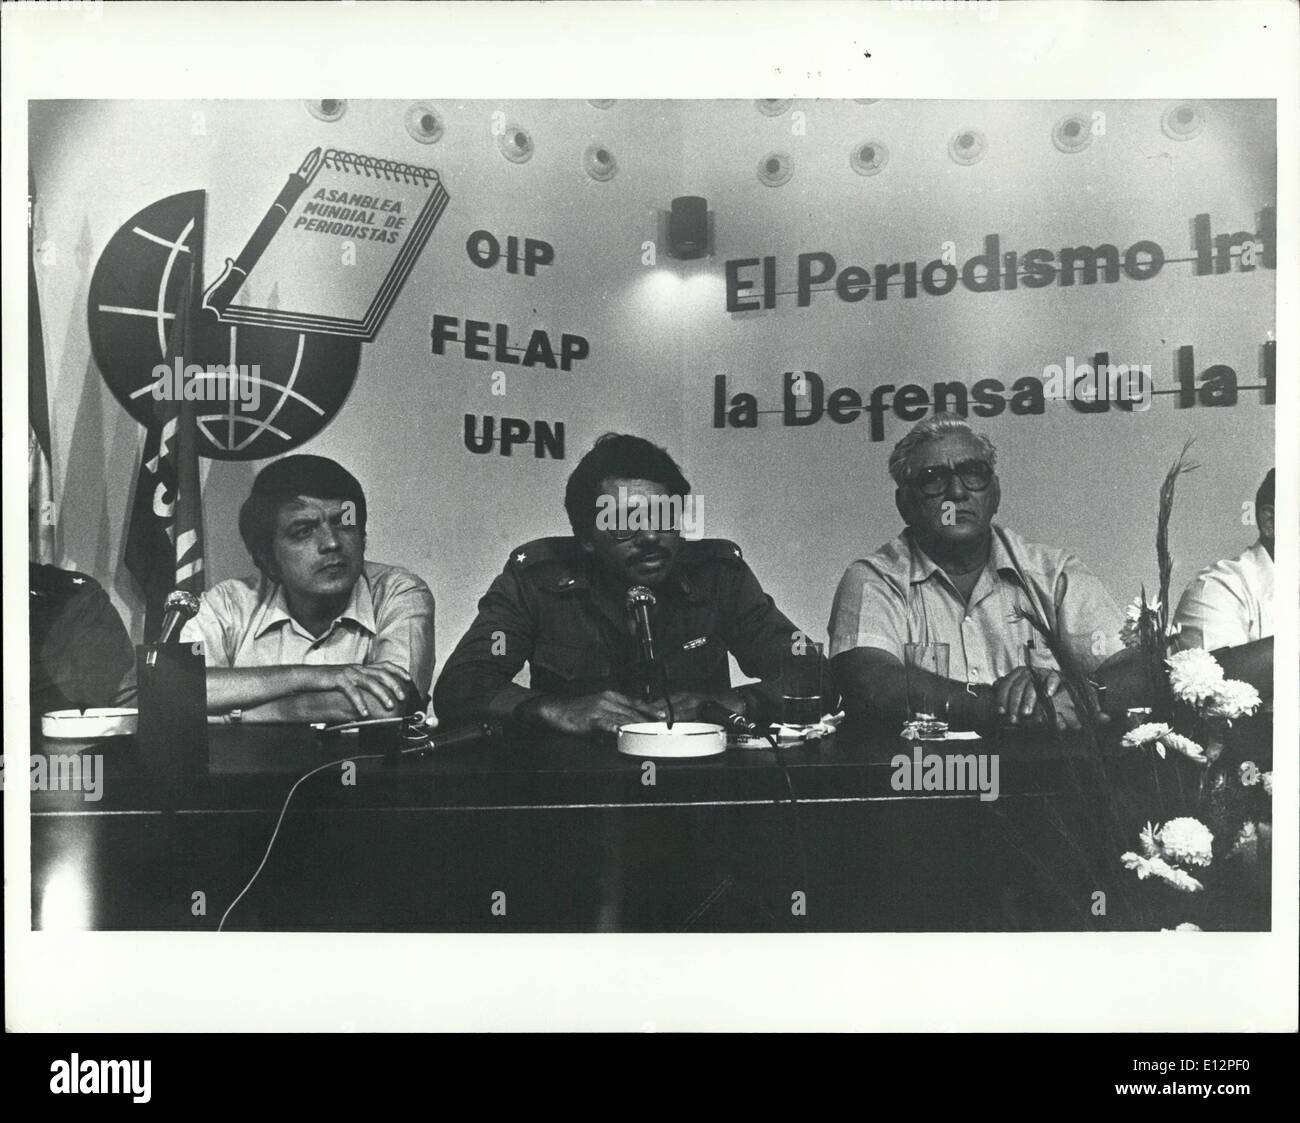 Feb. 24, 2012 - Maraqau - Nicaraqau 3 furling men of the government of l-R; Sergio Ramirez Daniel Ortega - coordinator Raphael Gordoua Rivas. Stock Photo